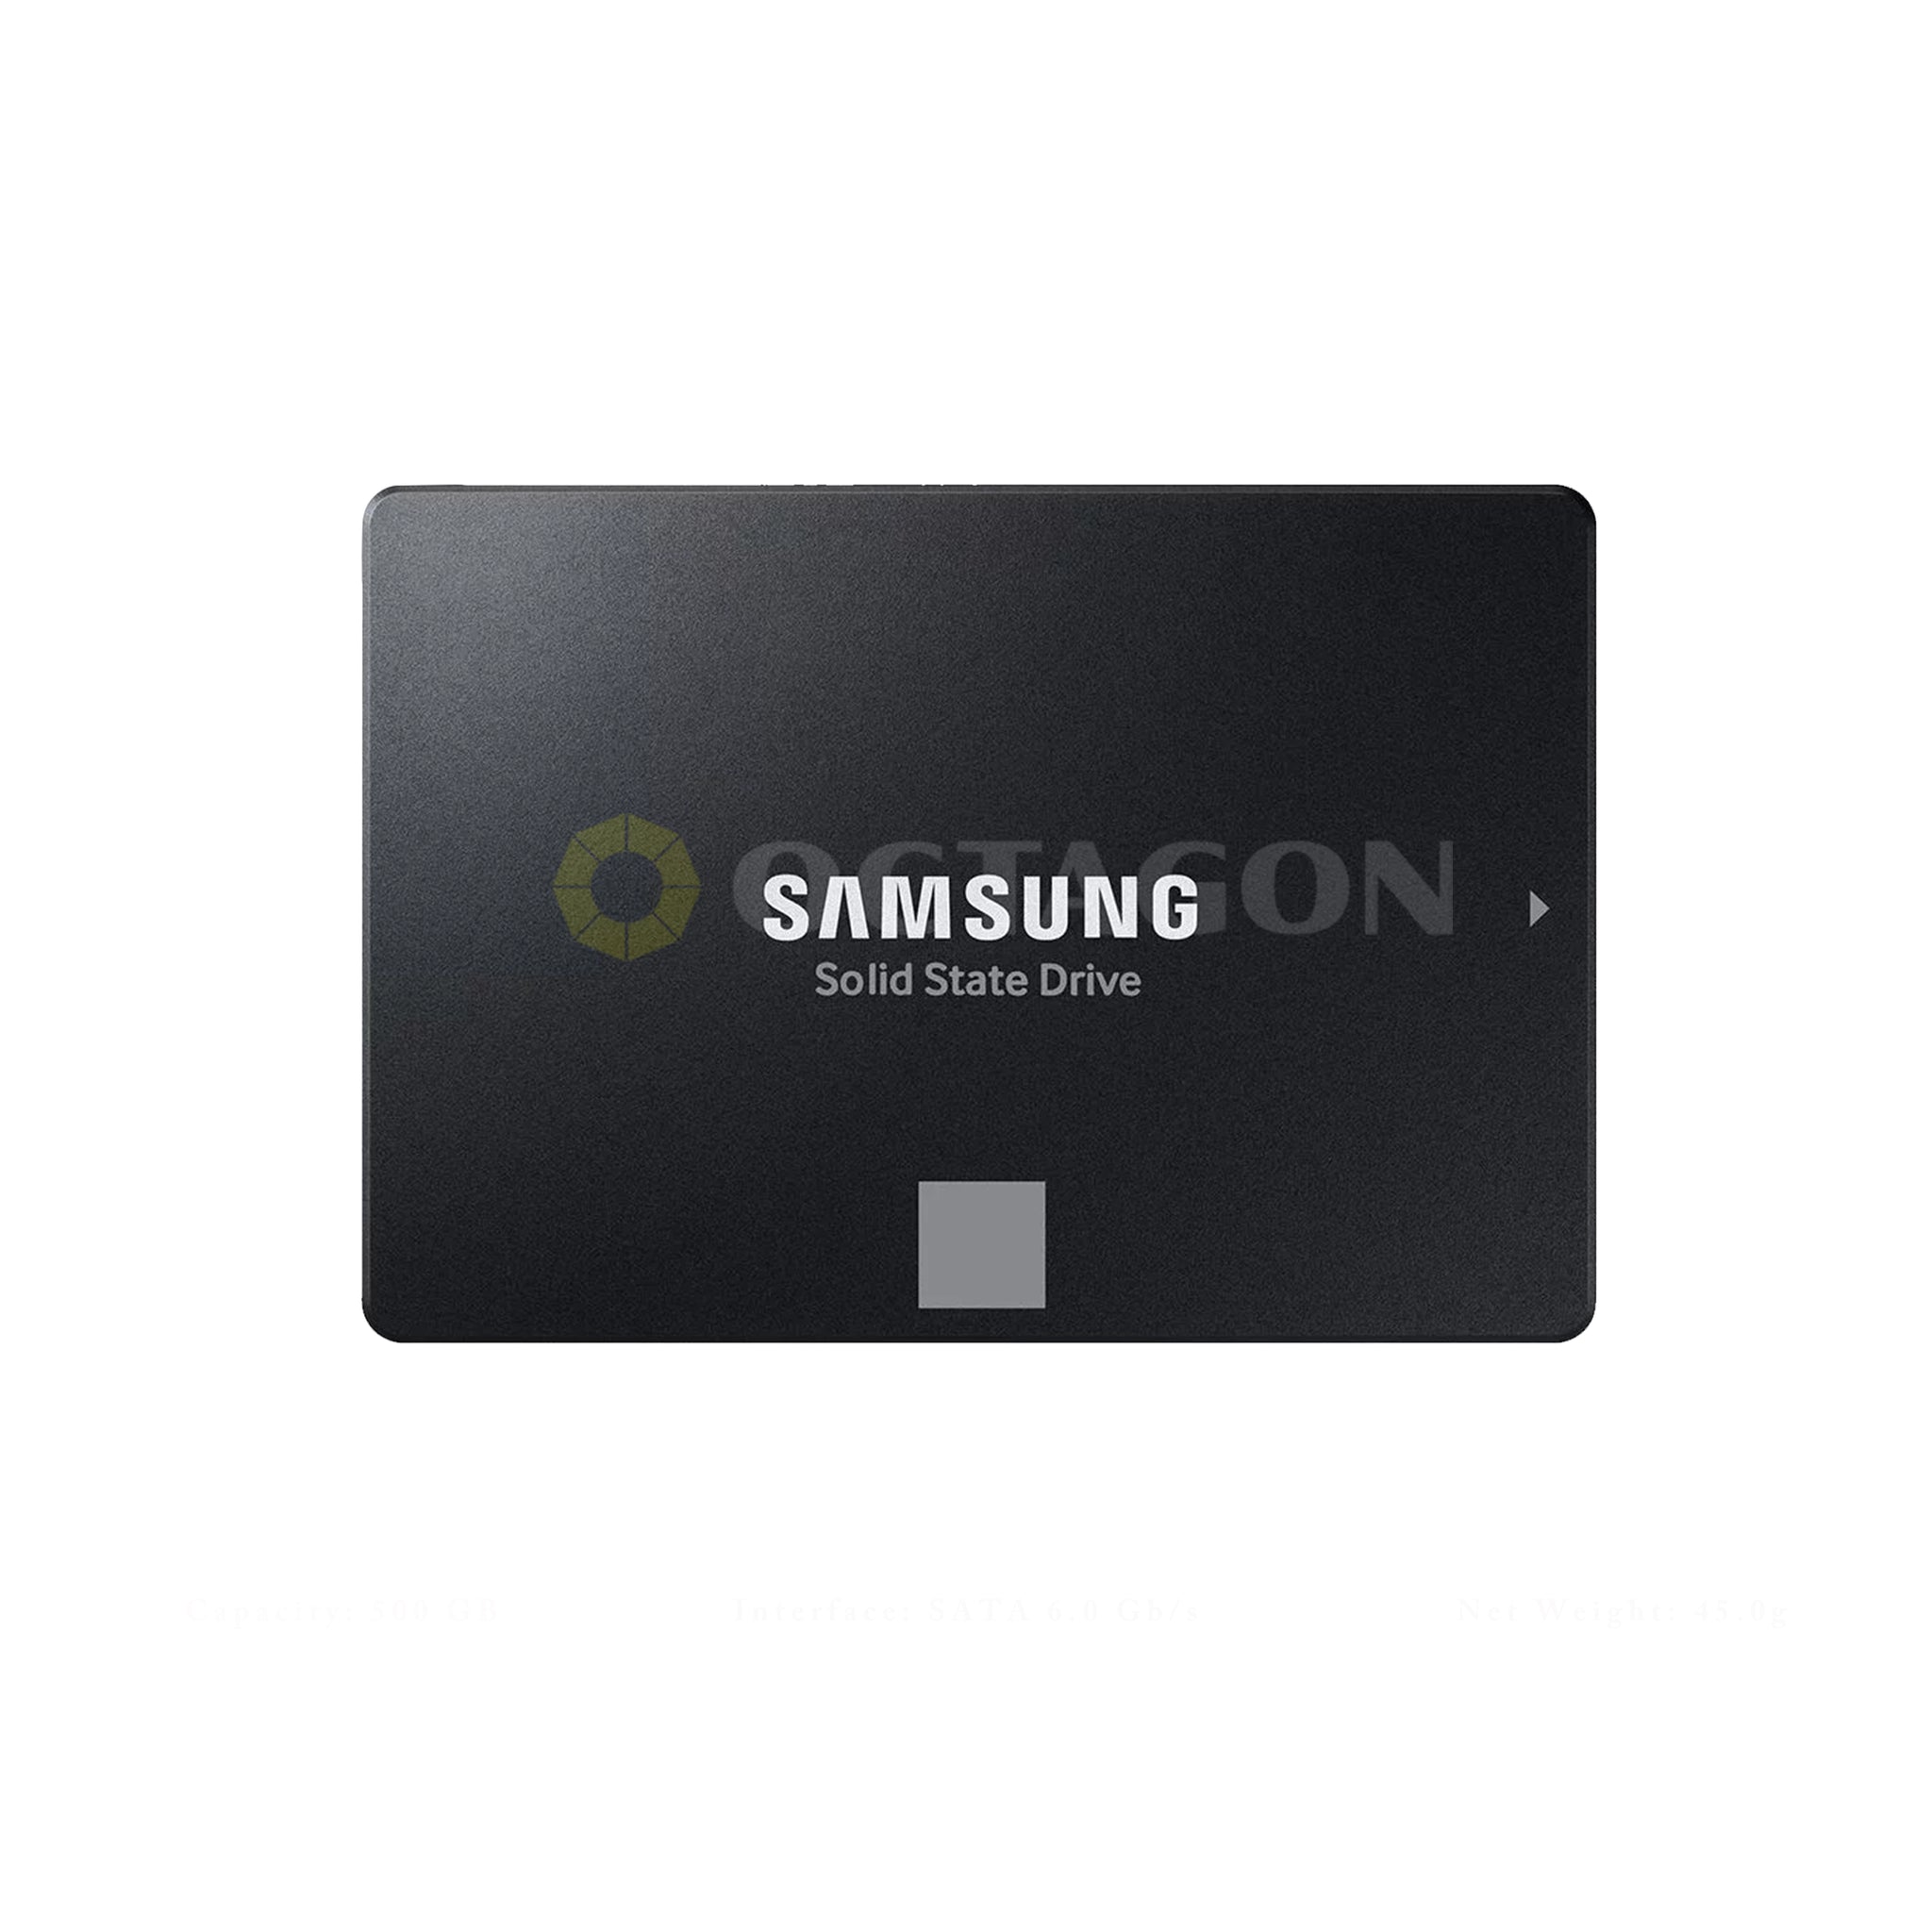 SAMSUNG SSD 500GB 870 EVO SATA 3